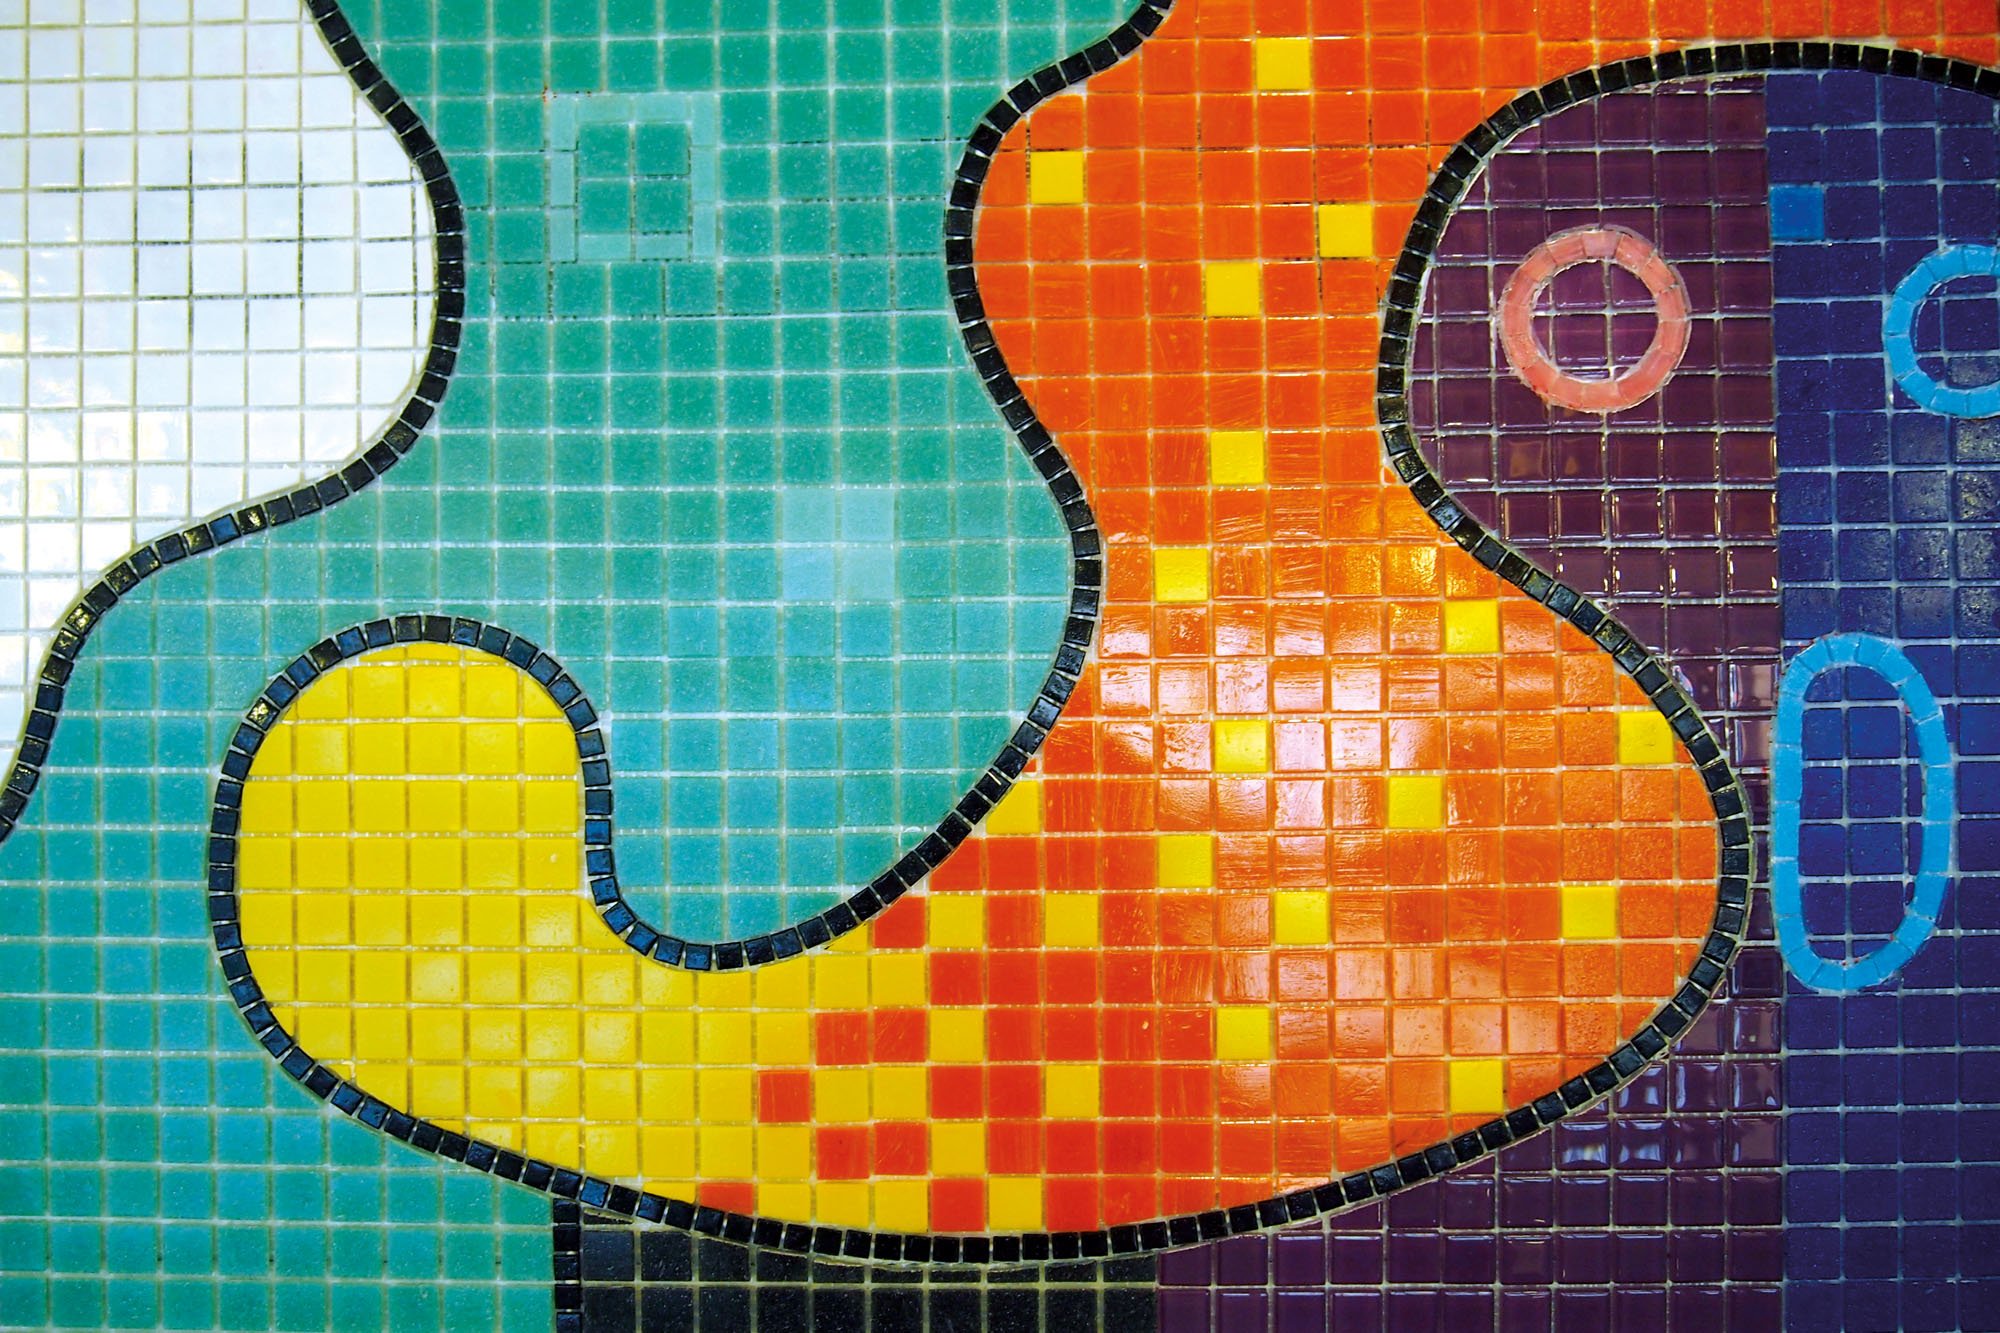 Wellness Palárikovo - mozaika detail, mosaic detail, 2013